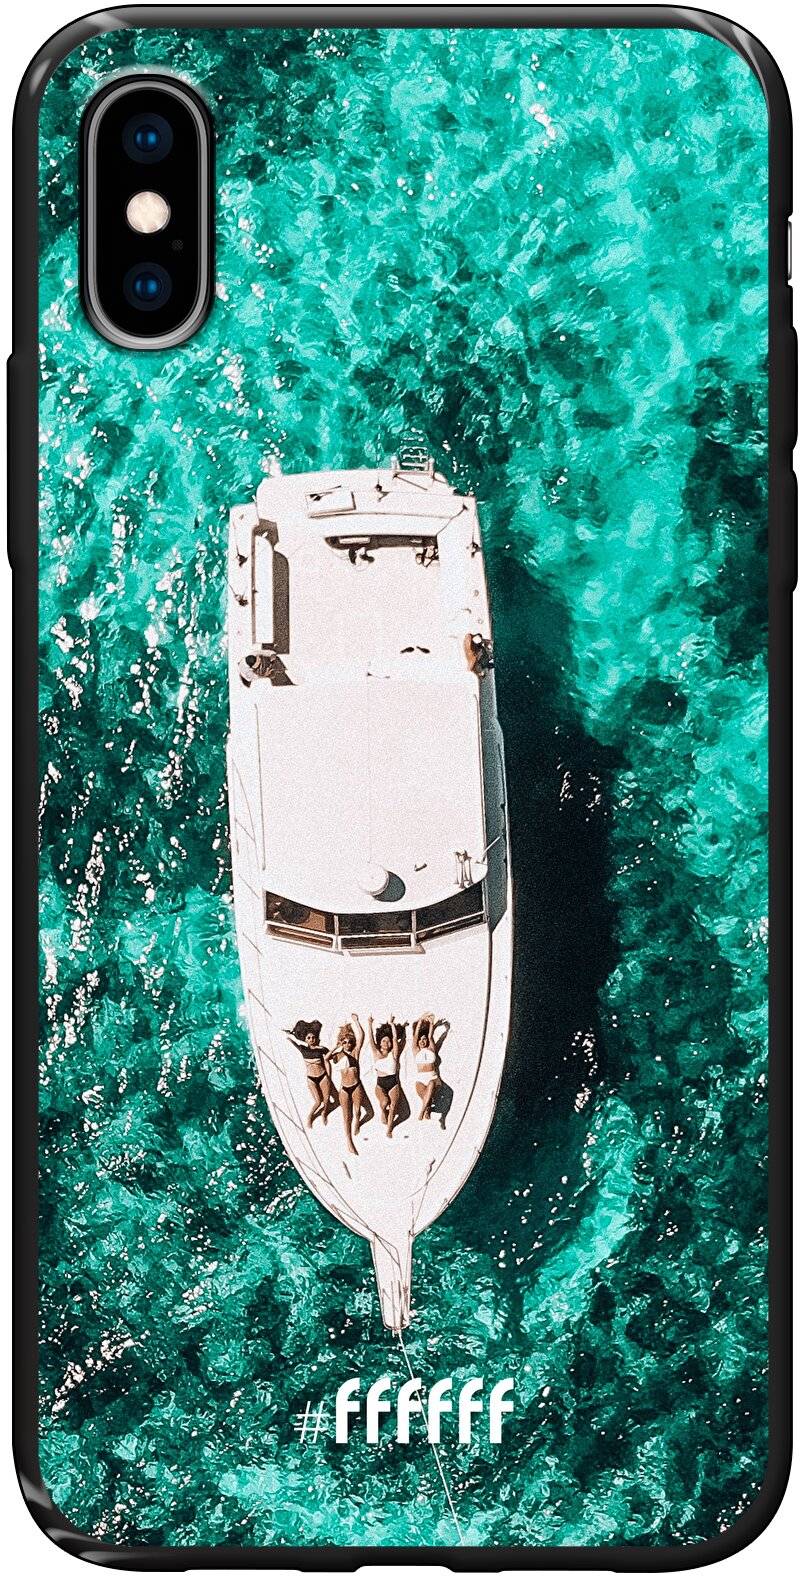 Yacht Life iPhone Xs